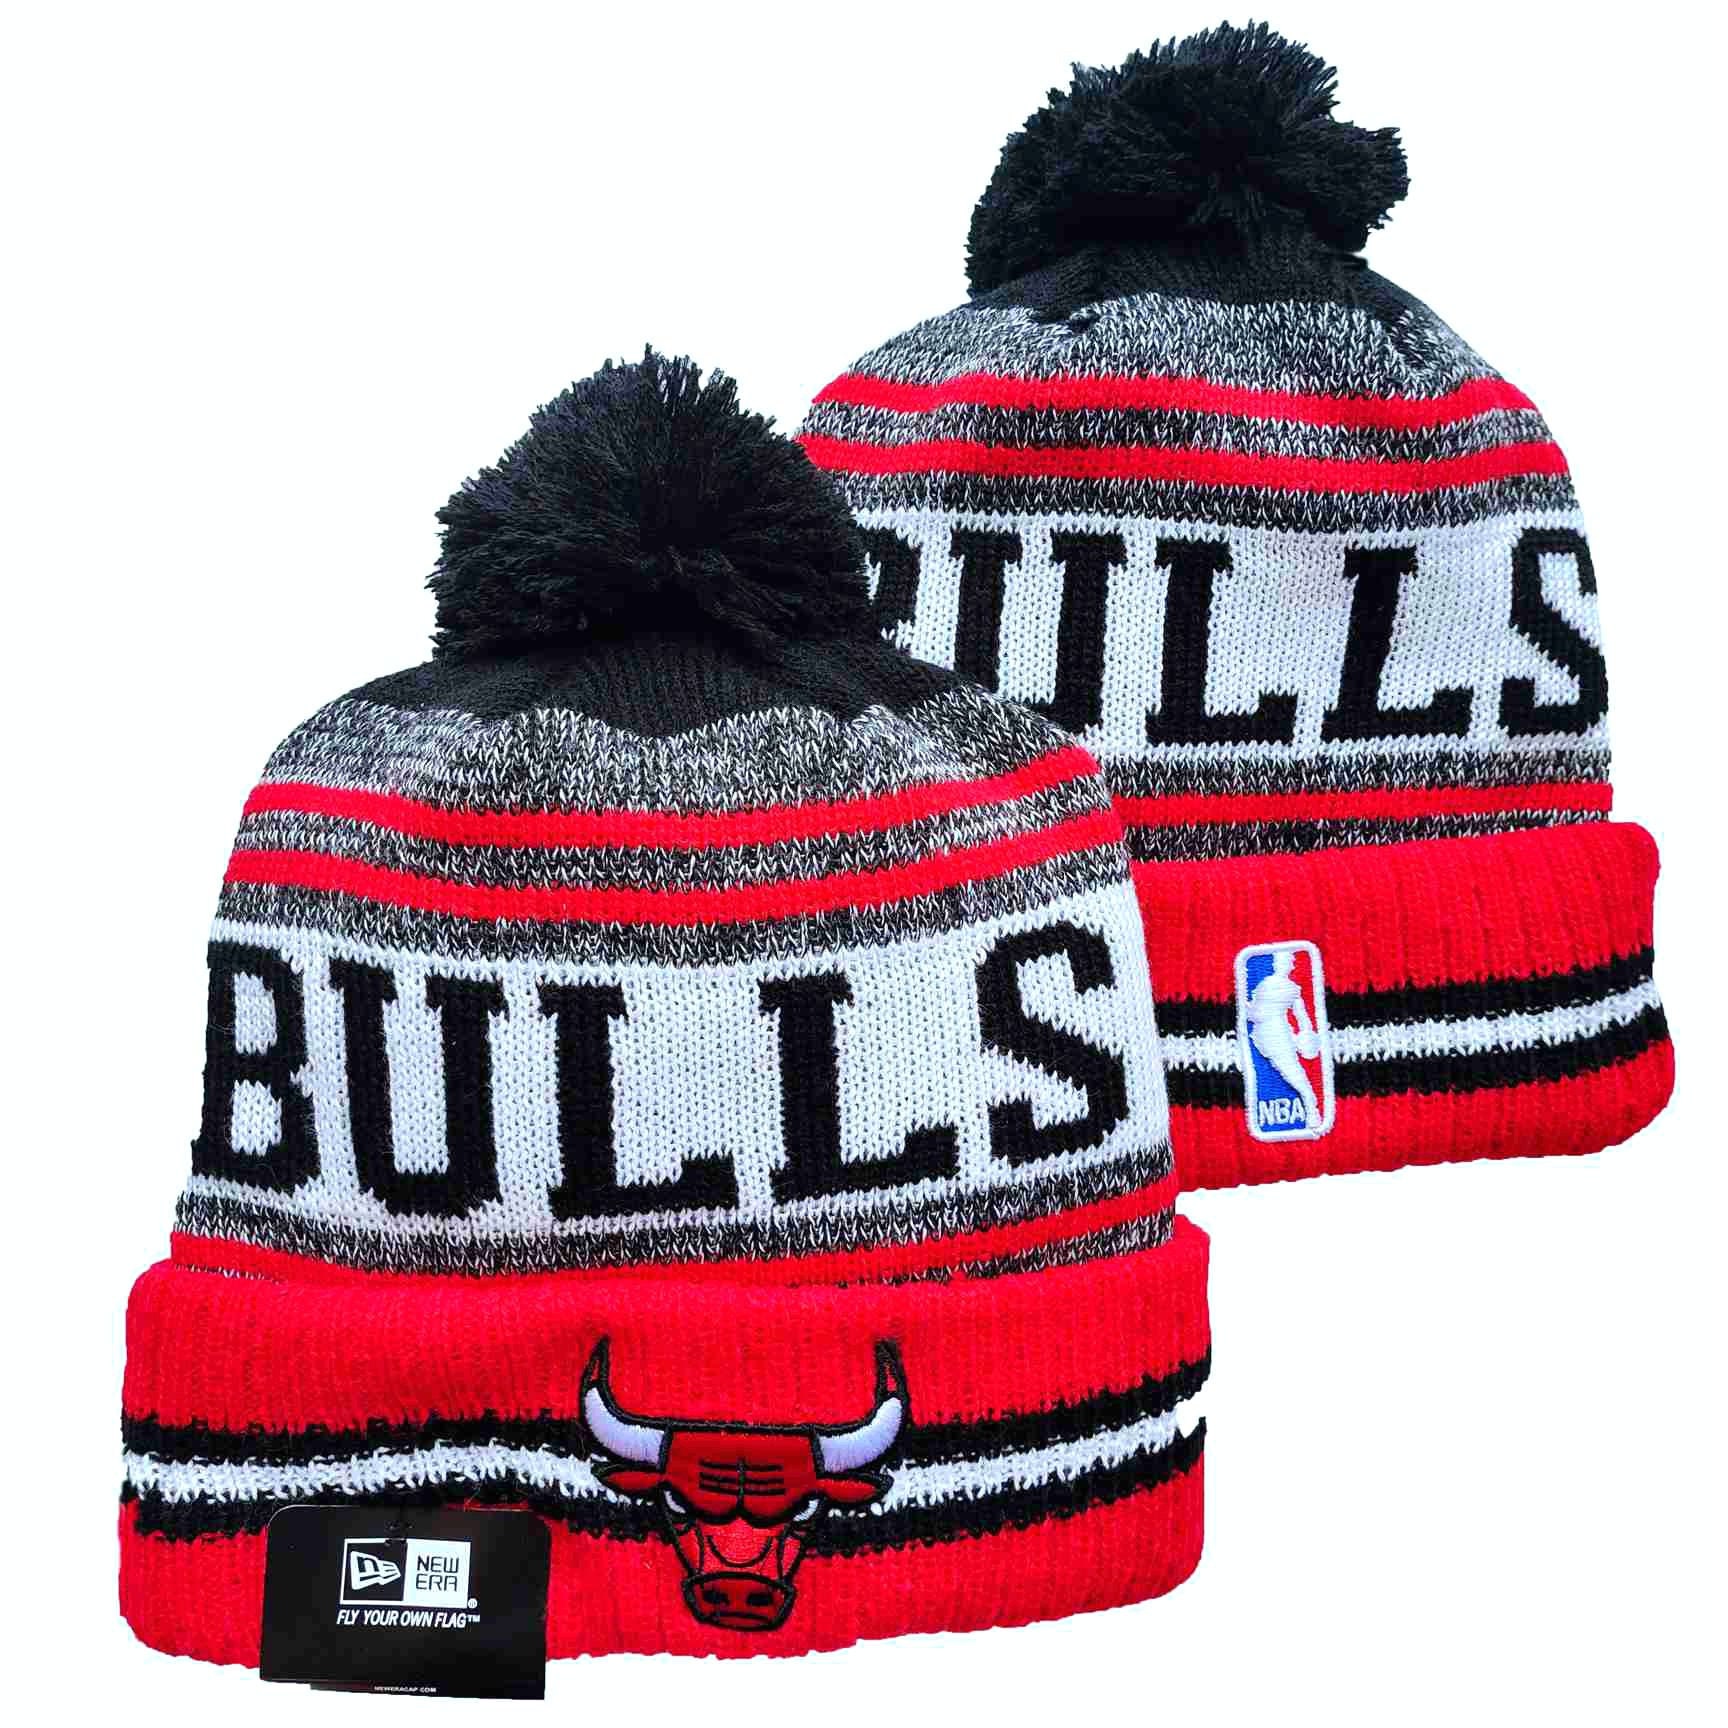 Men's New Era Black Chicago Bulls Zig Zag Cuffed Knit Hat with Pom